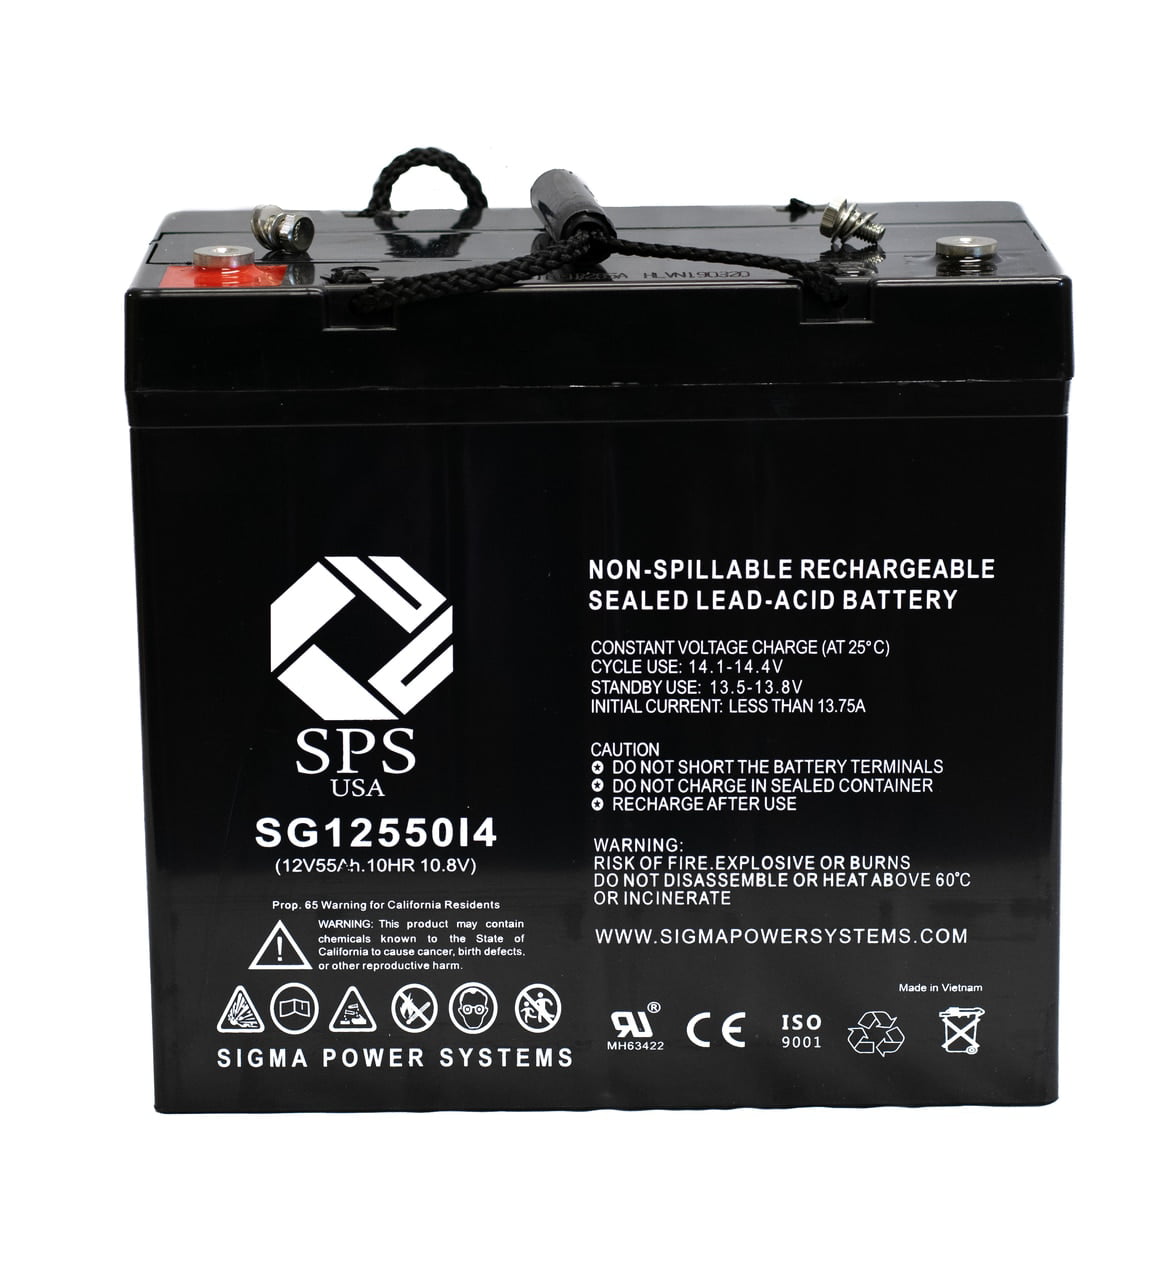 Batterie 12V 55Ah 510A 207x175x175 mm Steco premier stecopower - 201